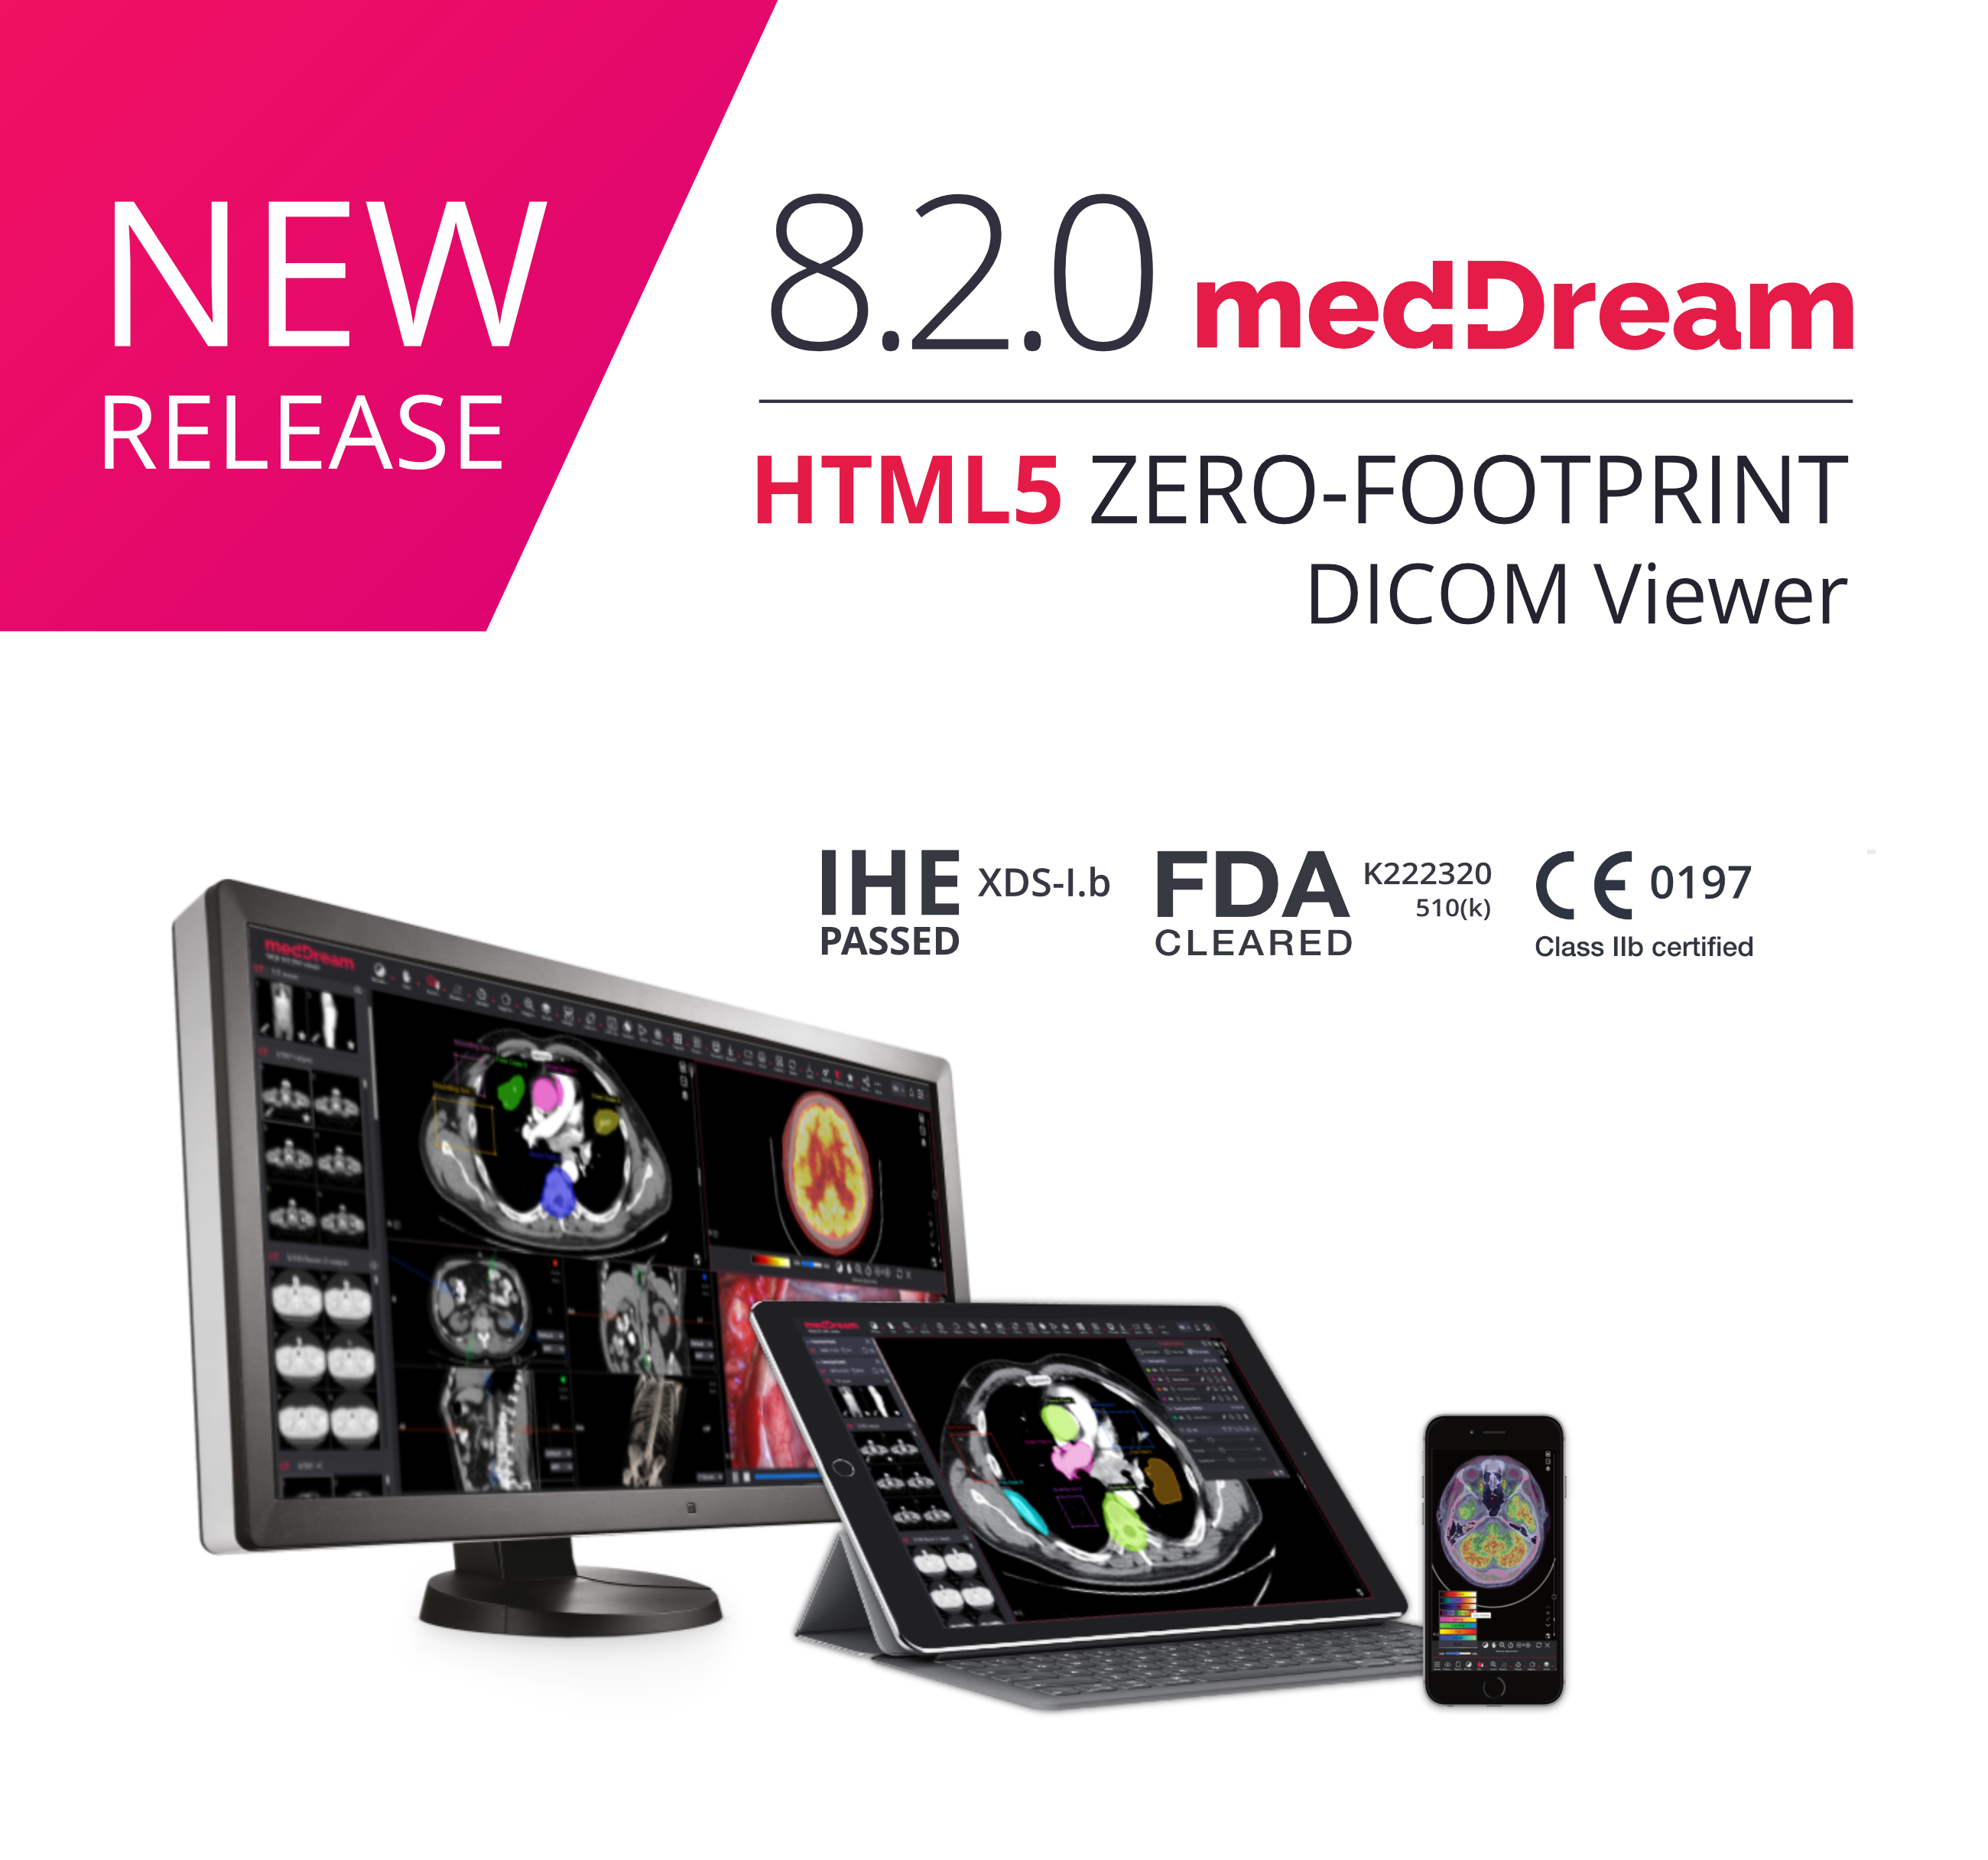 Meddream Dicom Viewer New Release V8.2.0 Cover